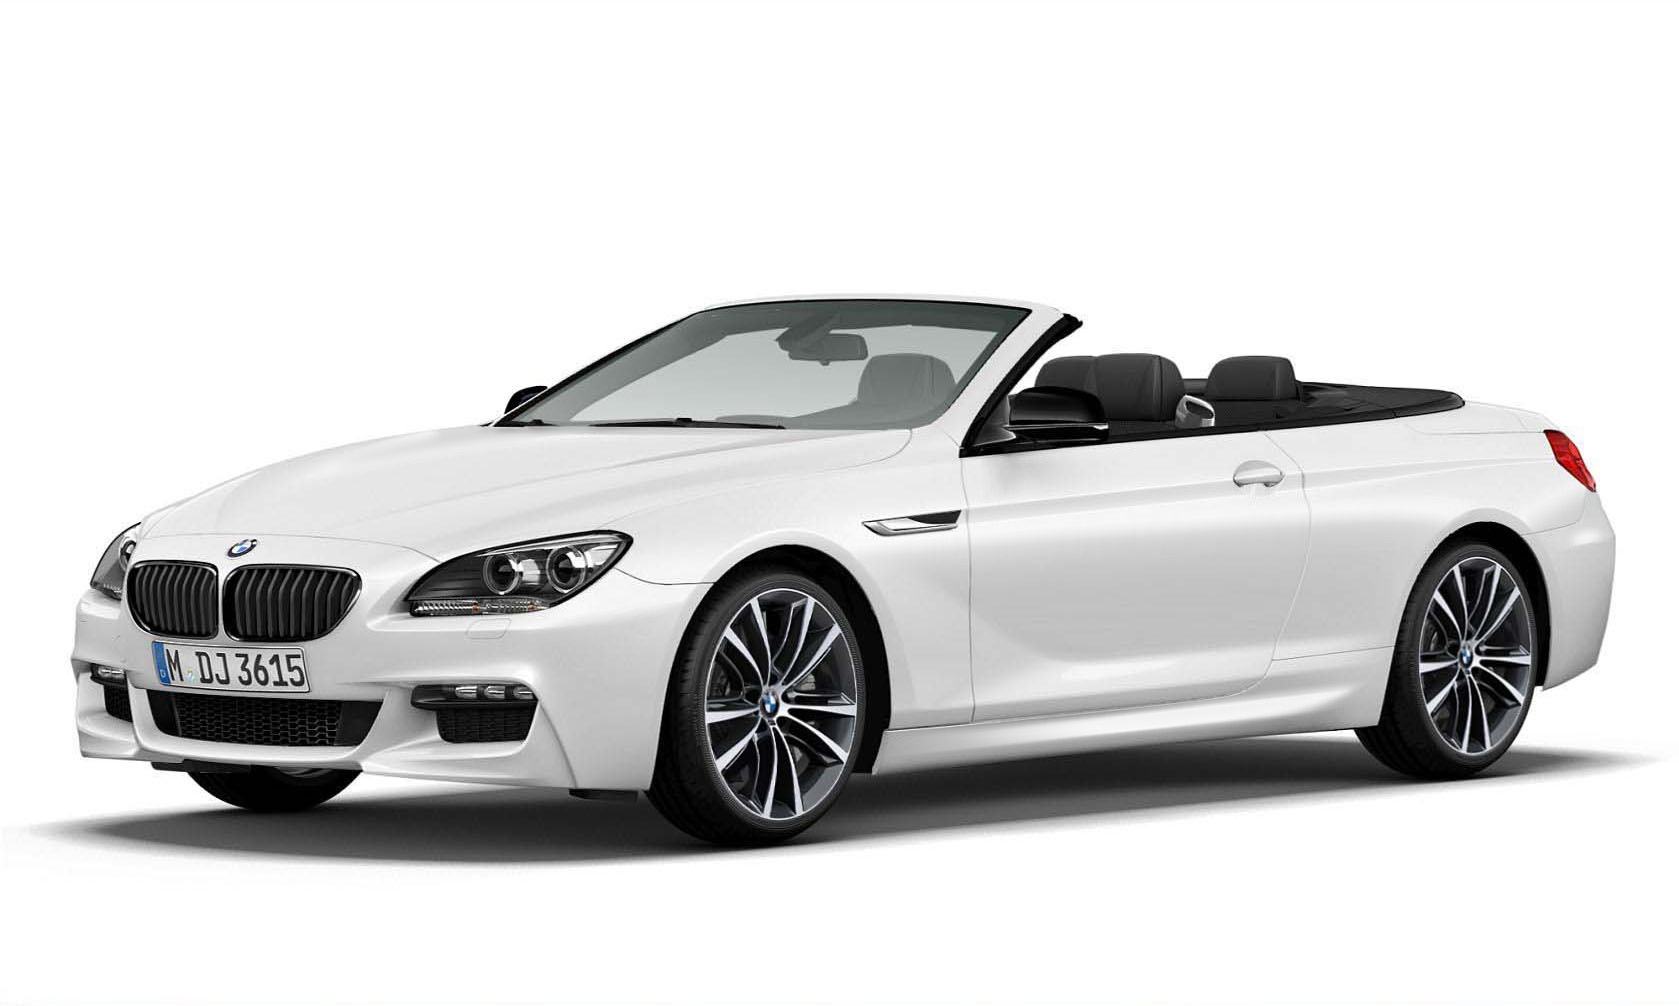 2014 BMW 6 Series Convertible Frozen Brilliant White Edition